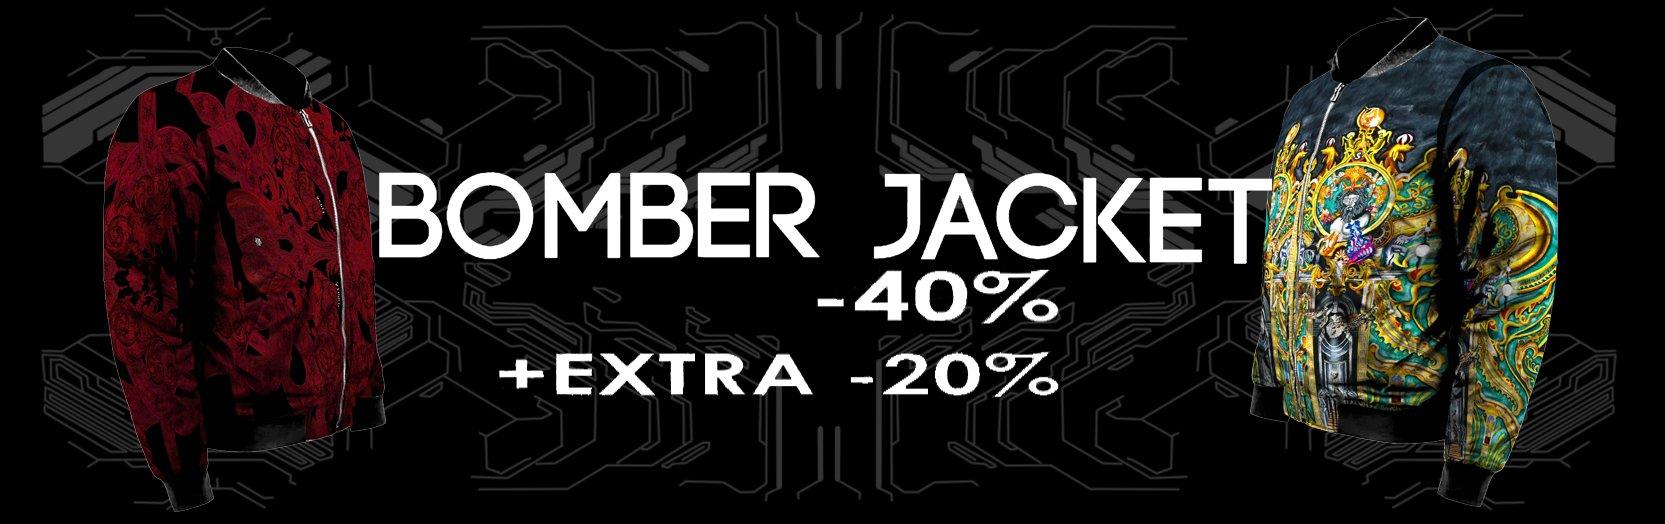 Bomber Jackets - Scott Atomic™ merchandise